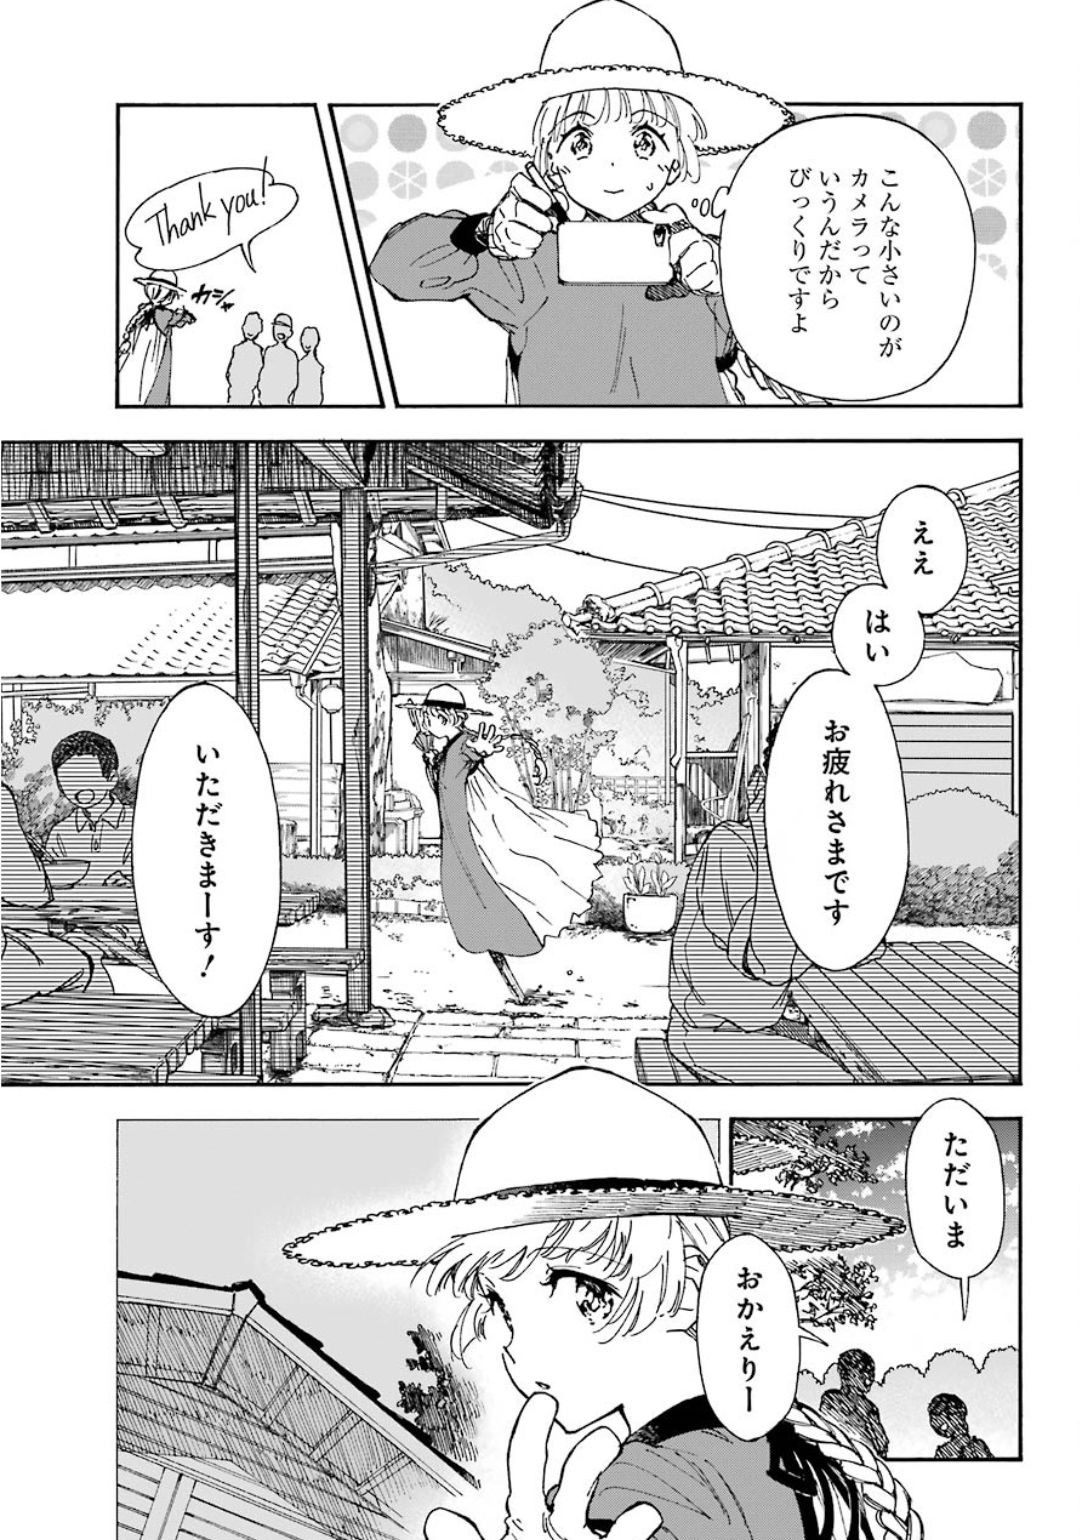 Hotomeku-kakashi - Chapter 04-1 - Page 15